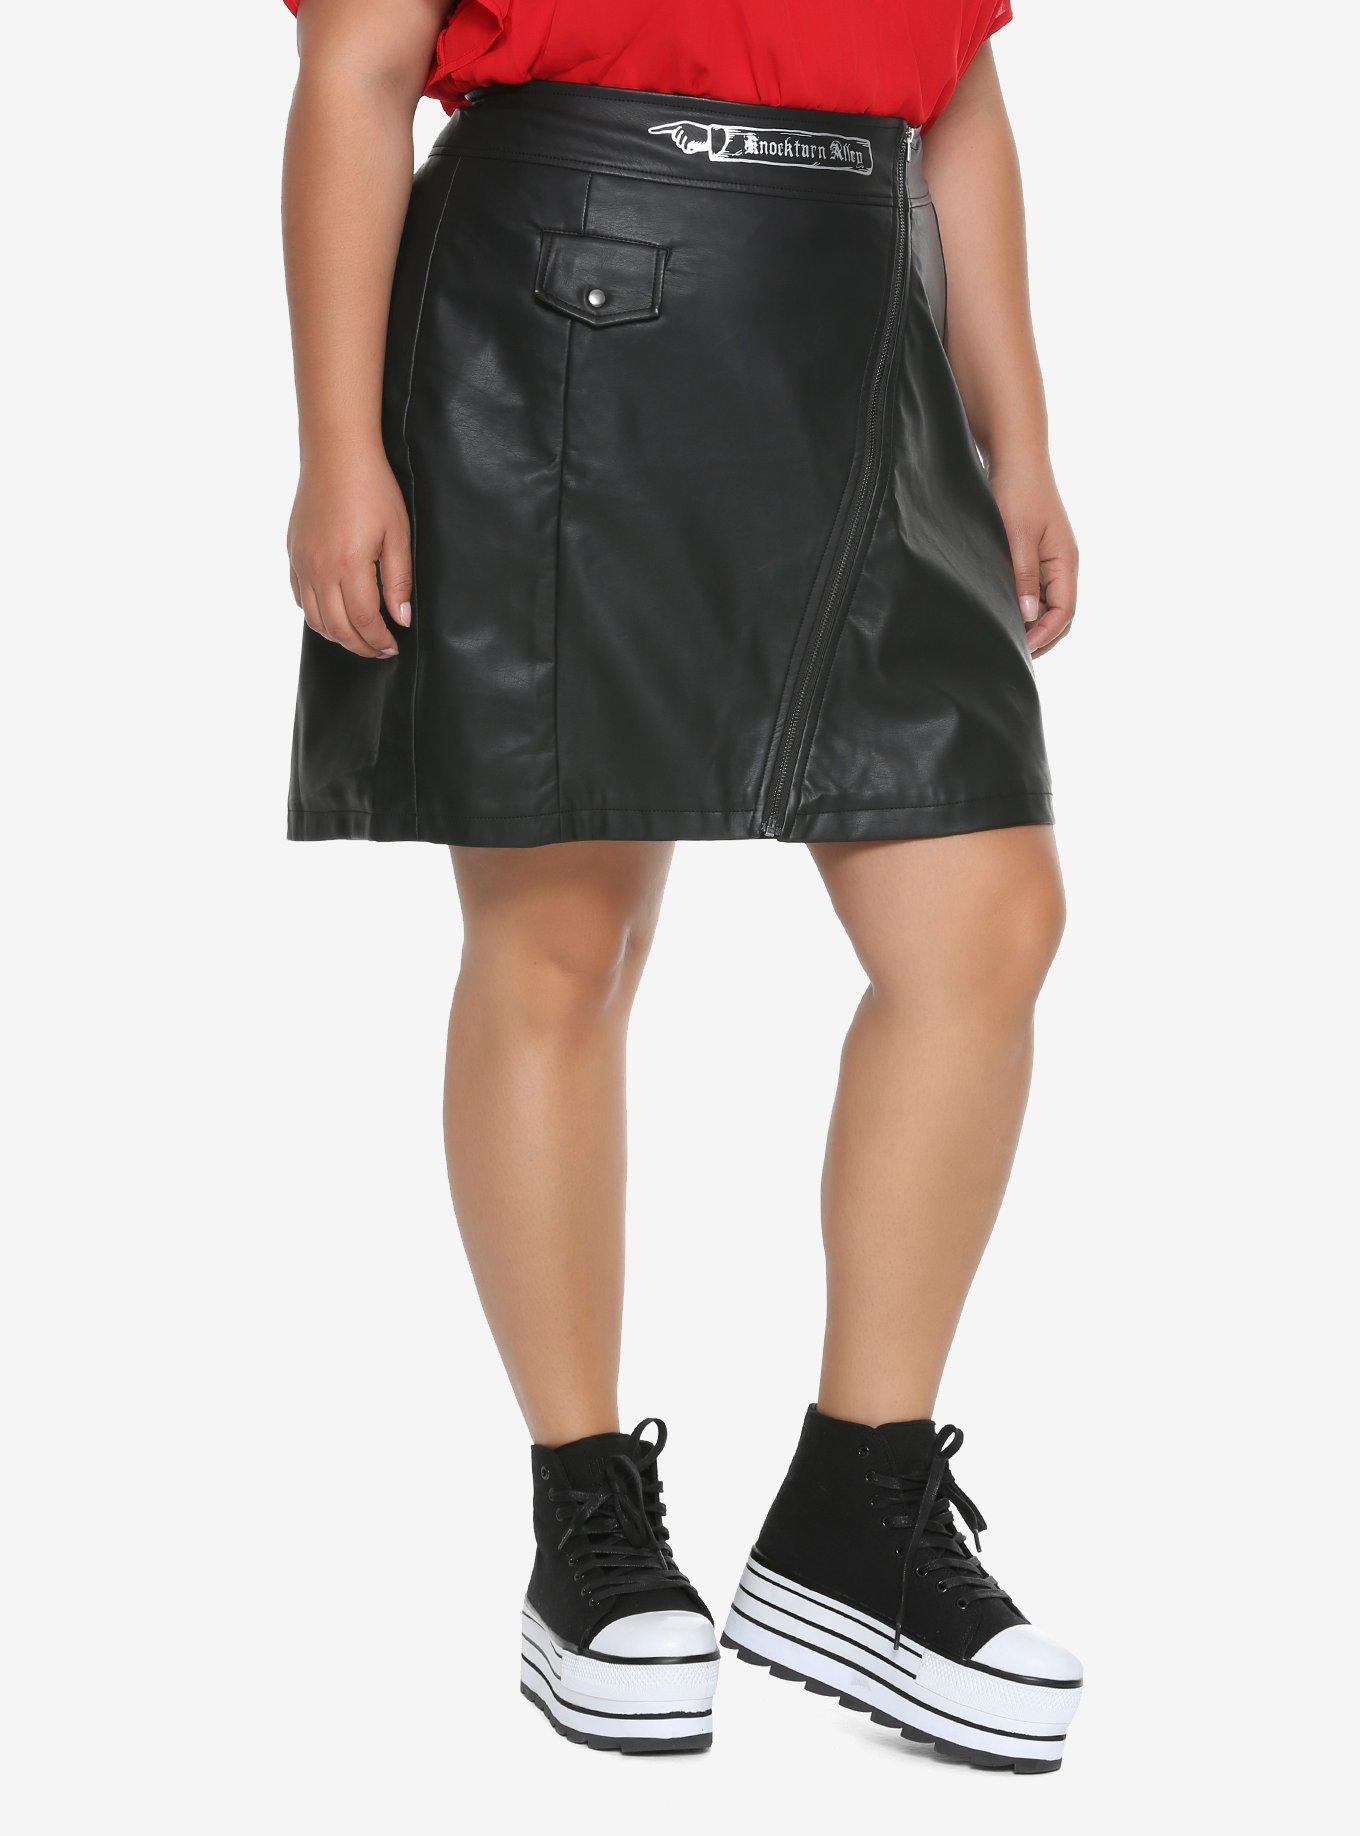 Harry Potter Knockturn Alley Faux Leather Skirt Plus Size, BLACK, hi-res